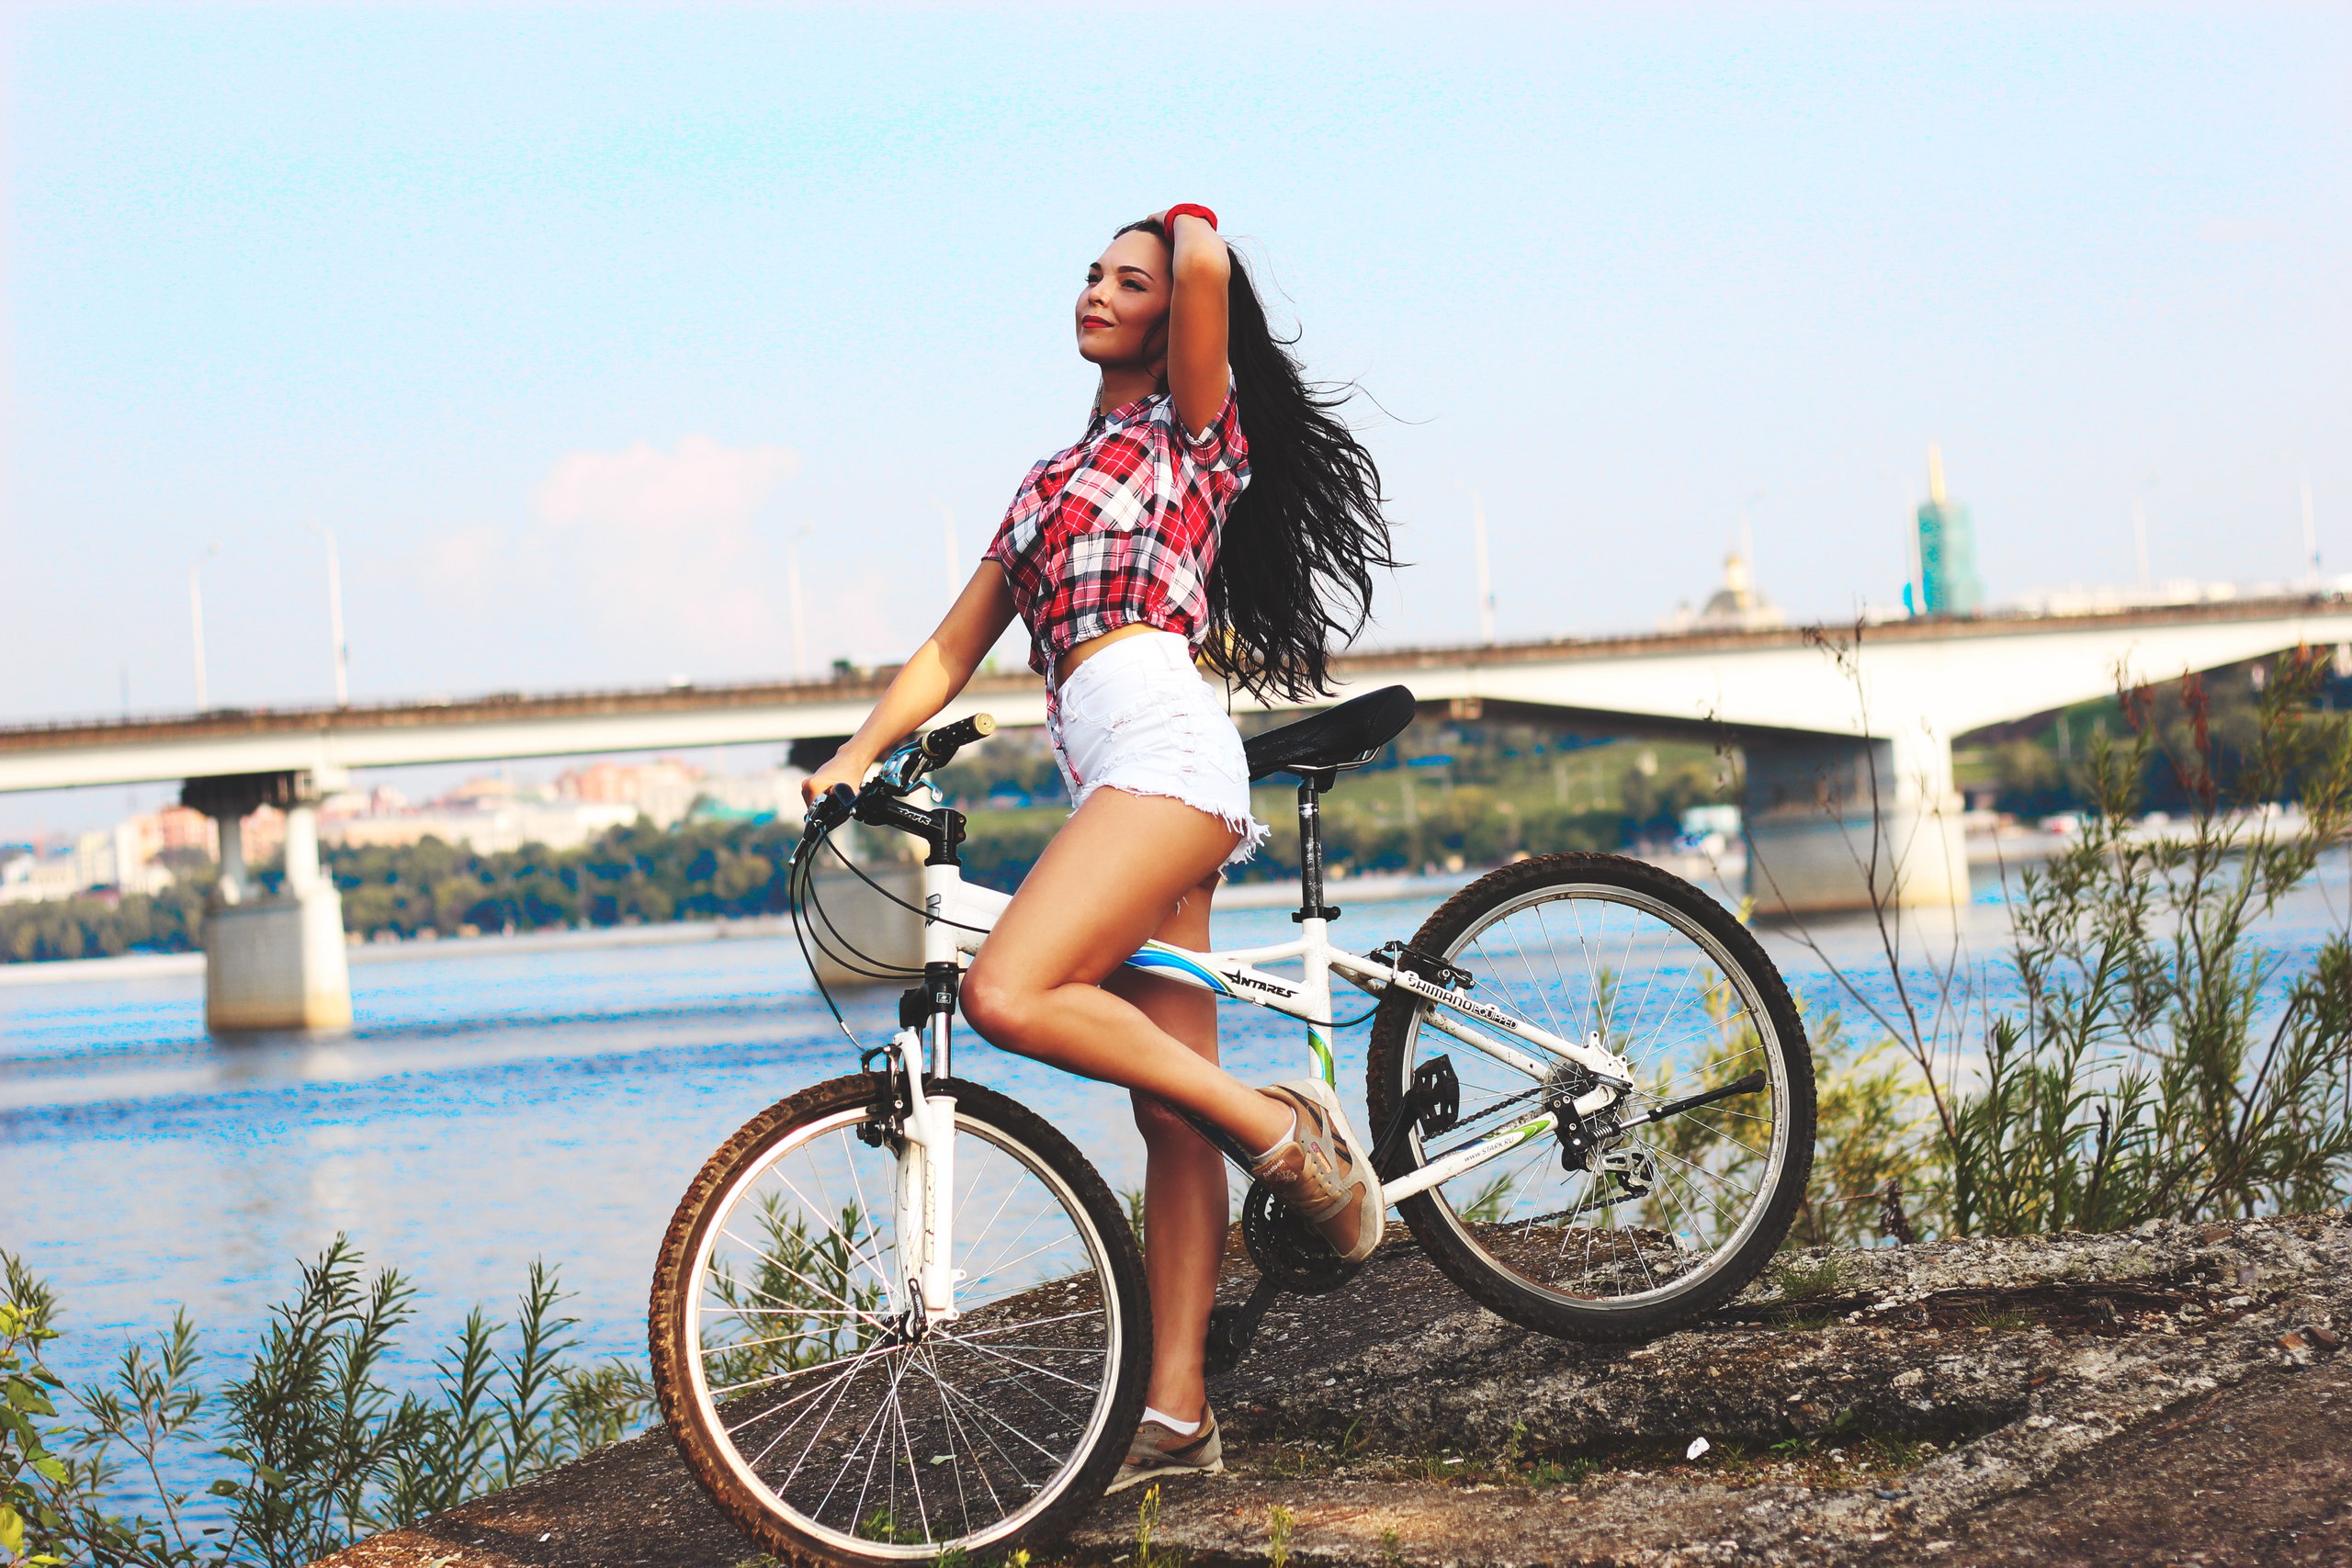 Women Women With Bikes Sneakers Shirt Tanned Women Outdoors Bridge River Looking Away 2560x1707